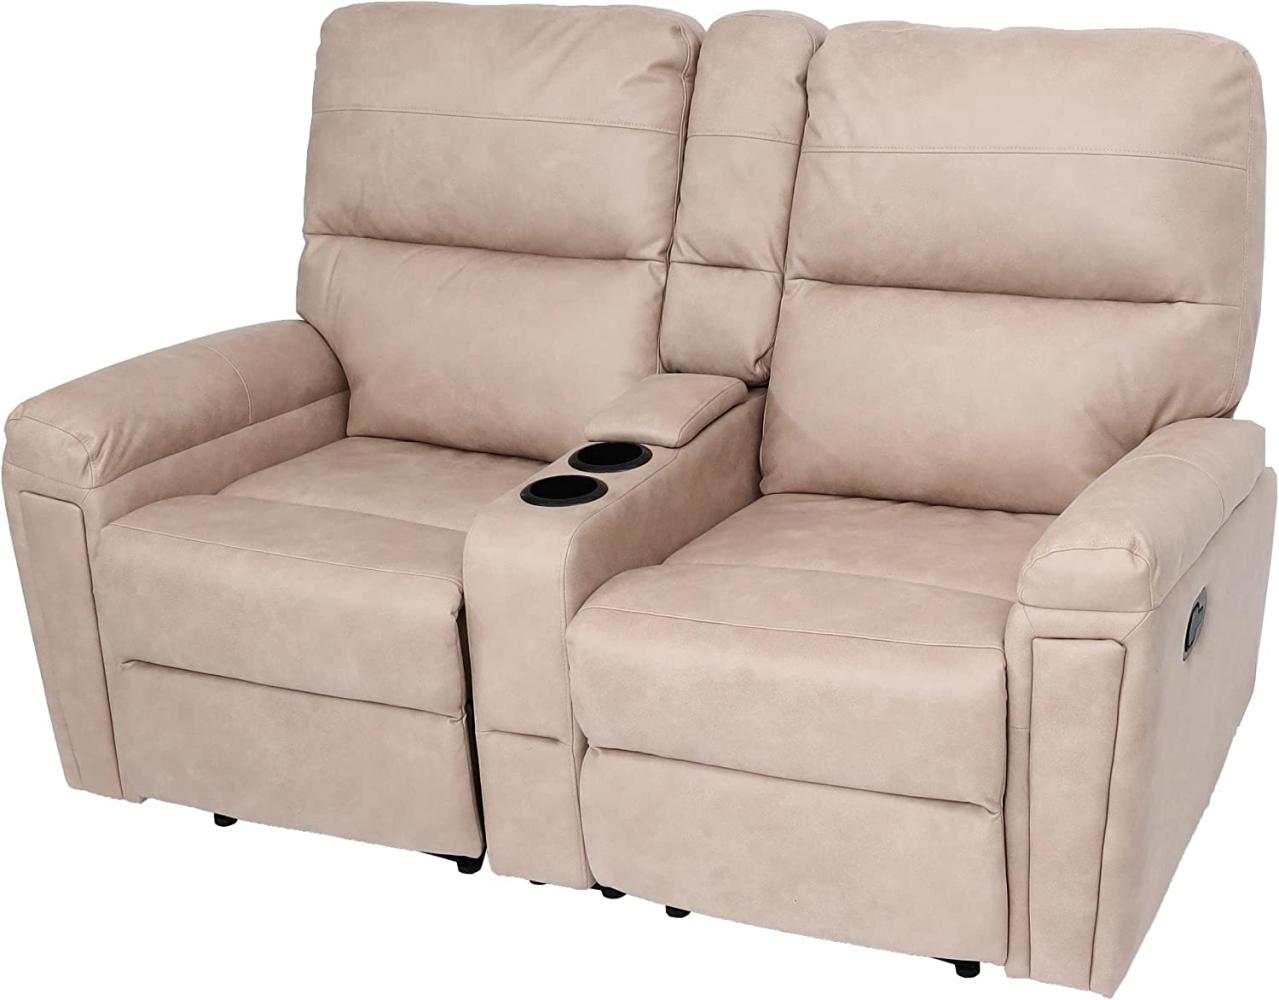 2er Kinosessel HWC-K17, Relaxsessel Fernsehsessel Sofa, Nosagfederung Getränkehalter Fach ~ Stoff/Textil beige Bild 1